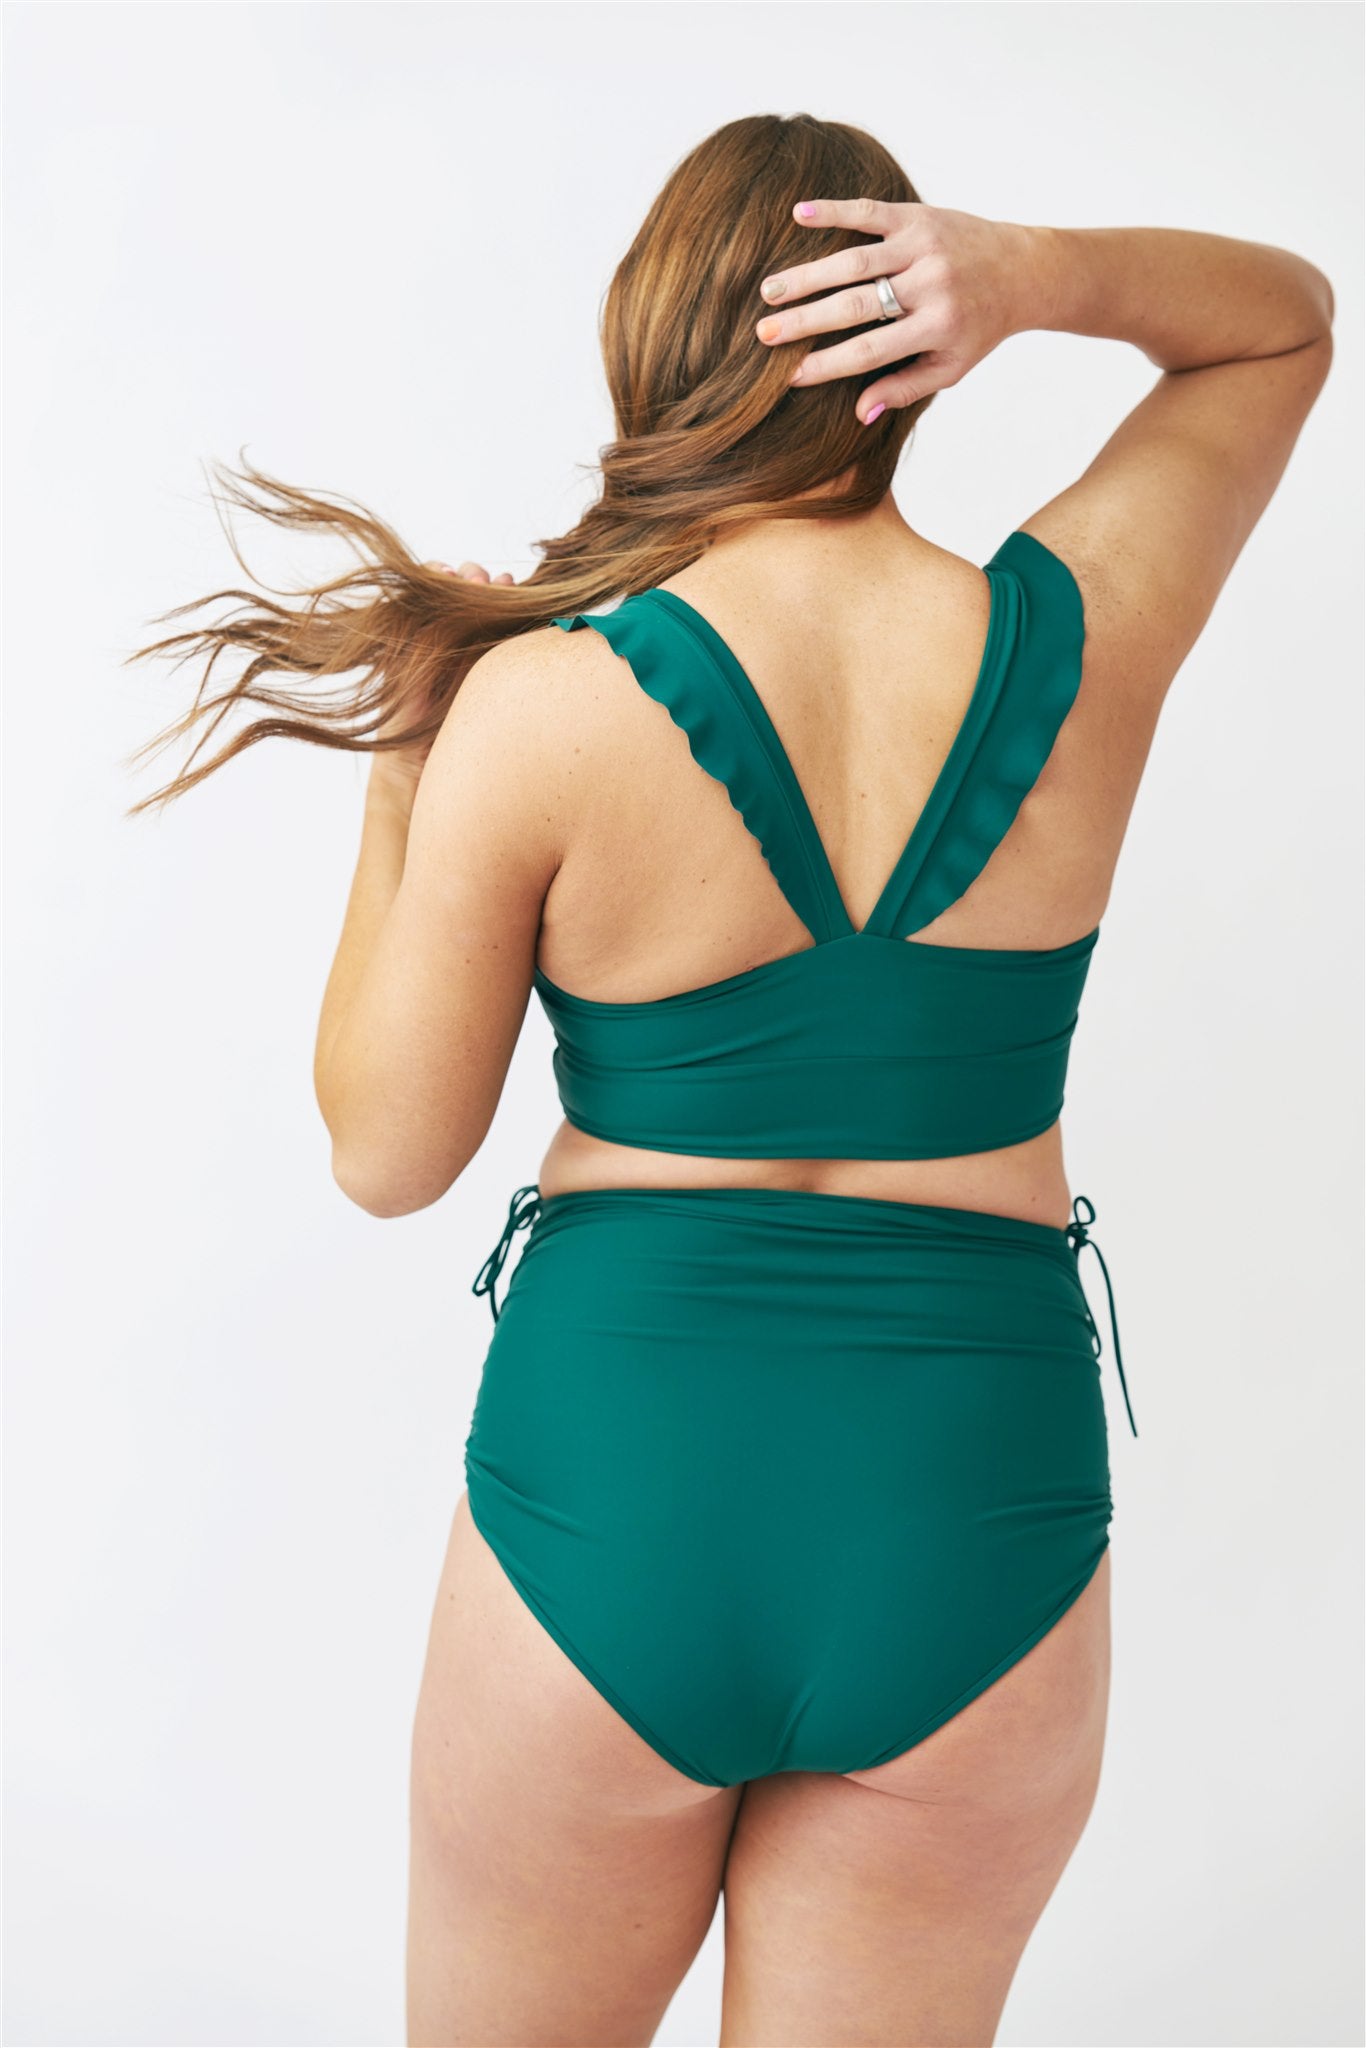 Complete back coverage swimsuit top for women - Jasmine Top - June Loop –  June Loop Swimwear